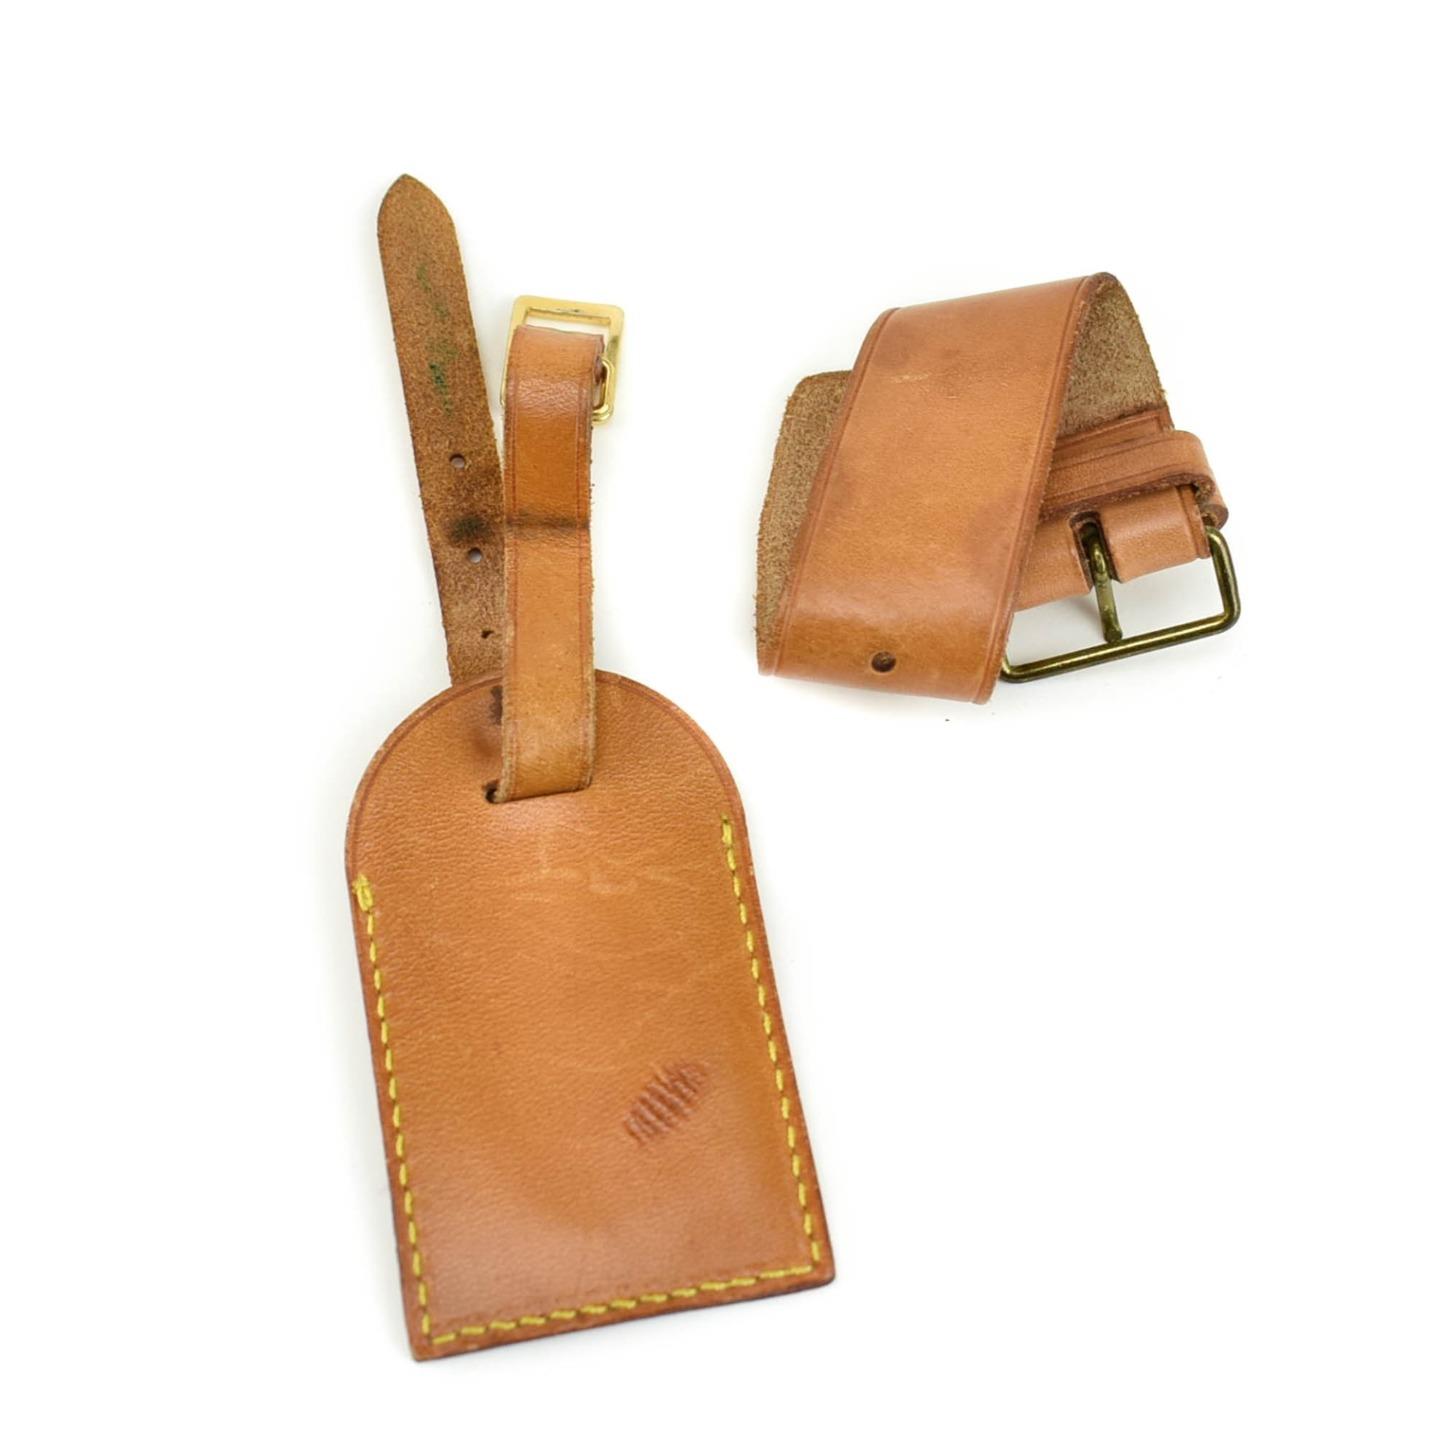 LOUIS VUITTON: Tan, Vachetta Leather Logo Luggage Tag & Keepall Set (pv) | eBay